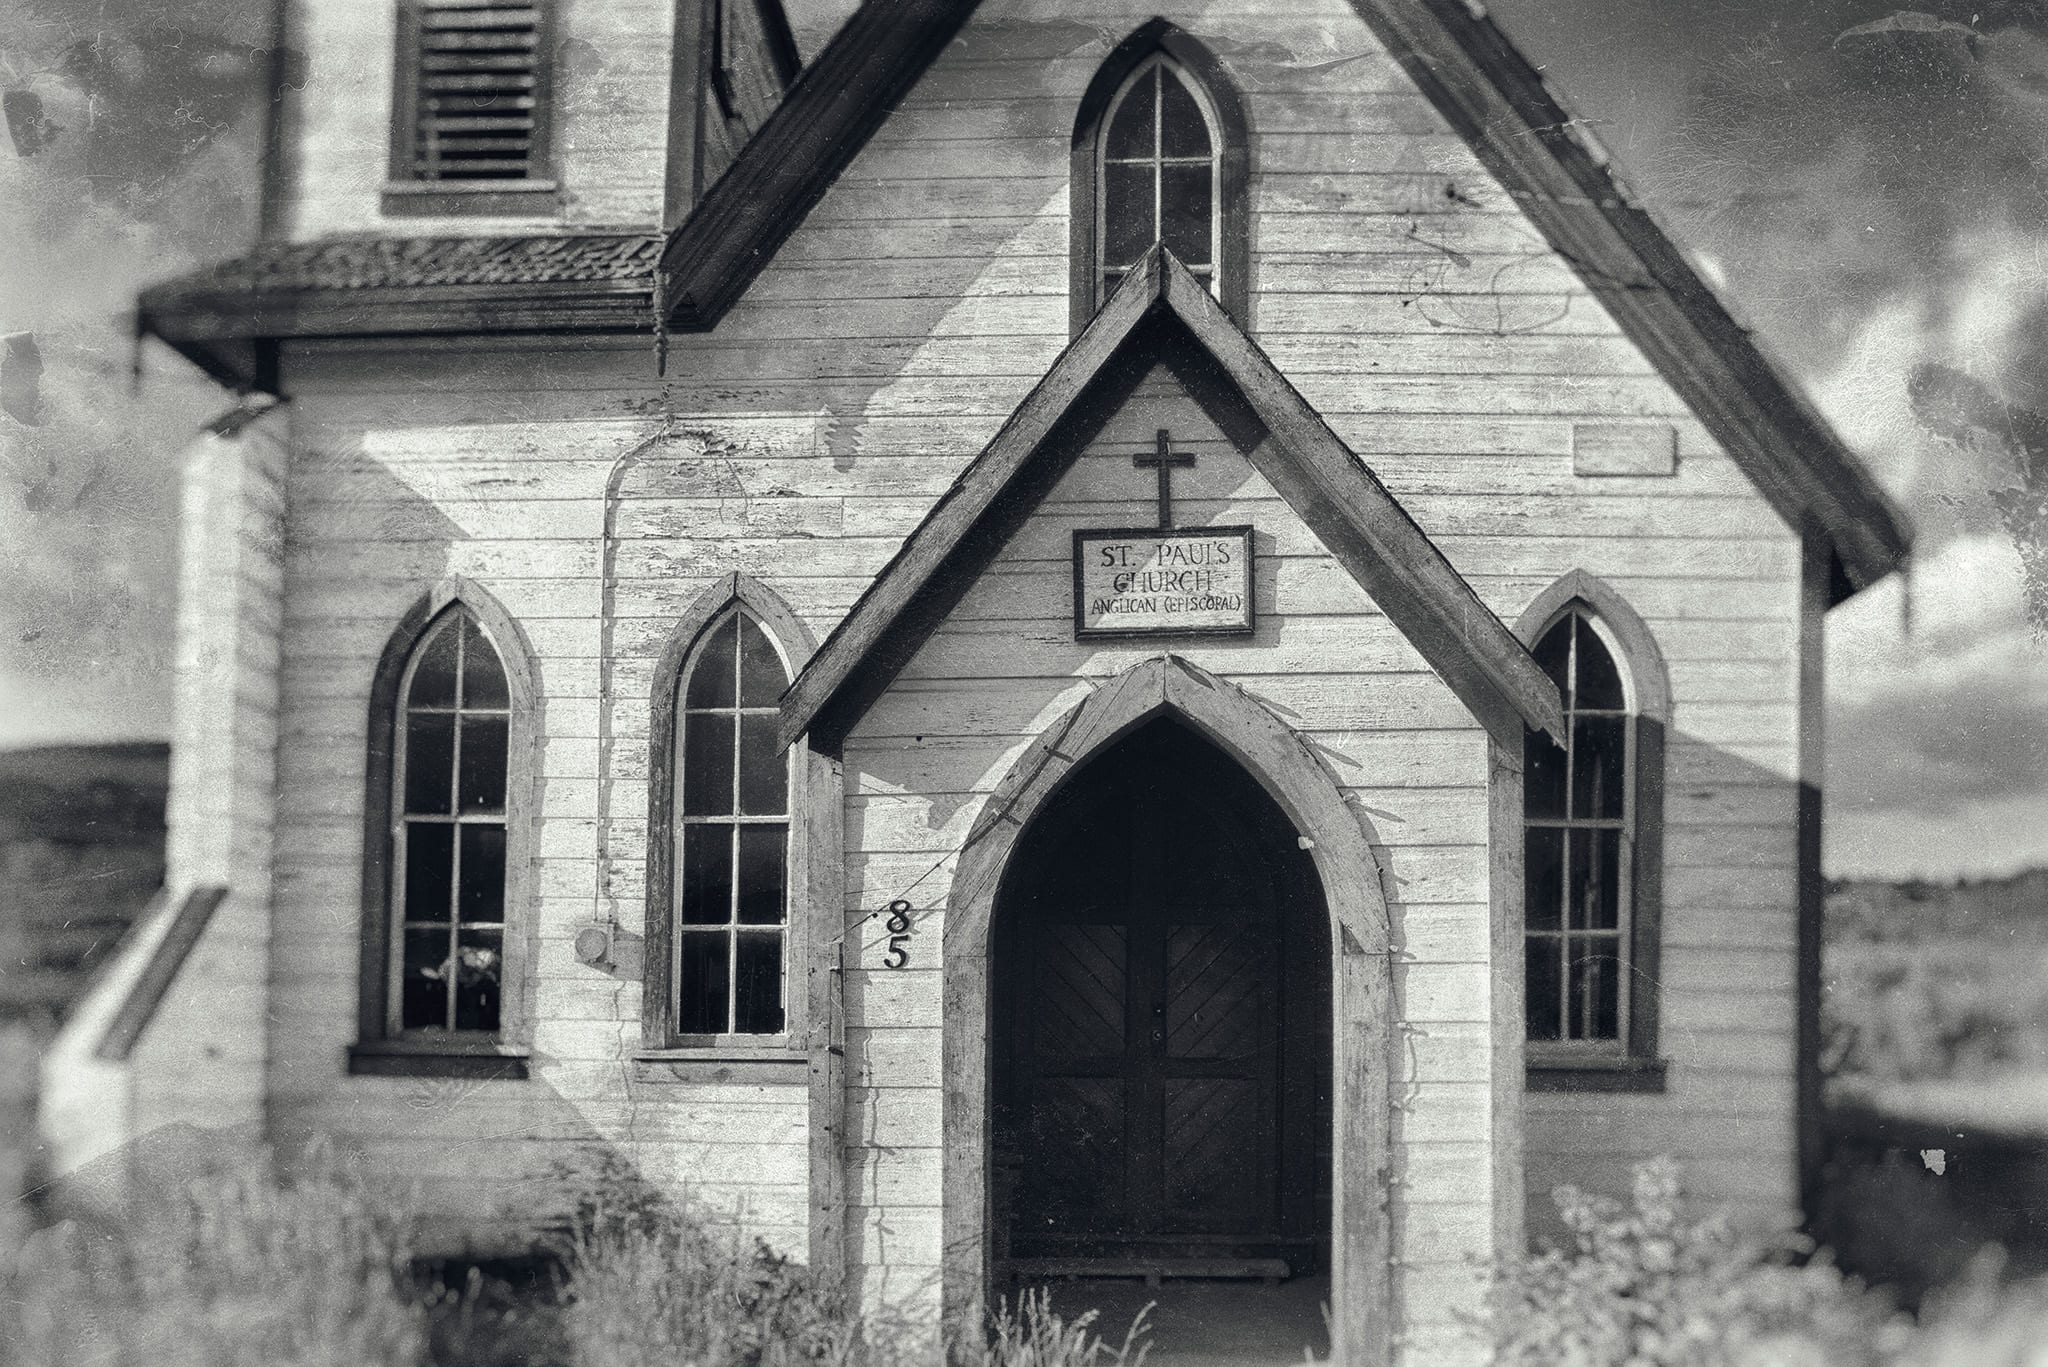 St Paul’s Anglican Church, built in 1893, Kitwanga, British Columbia, Canada.